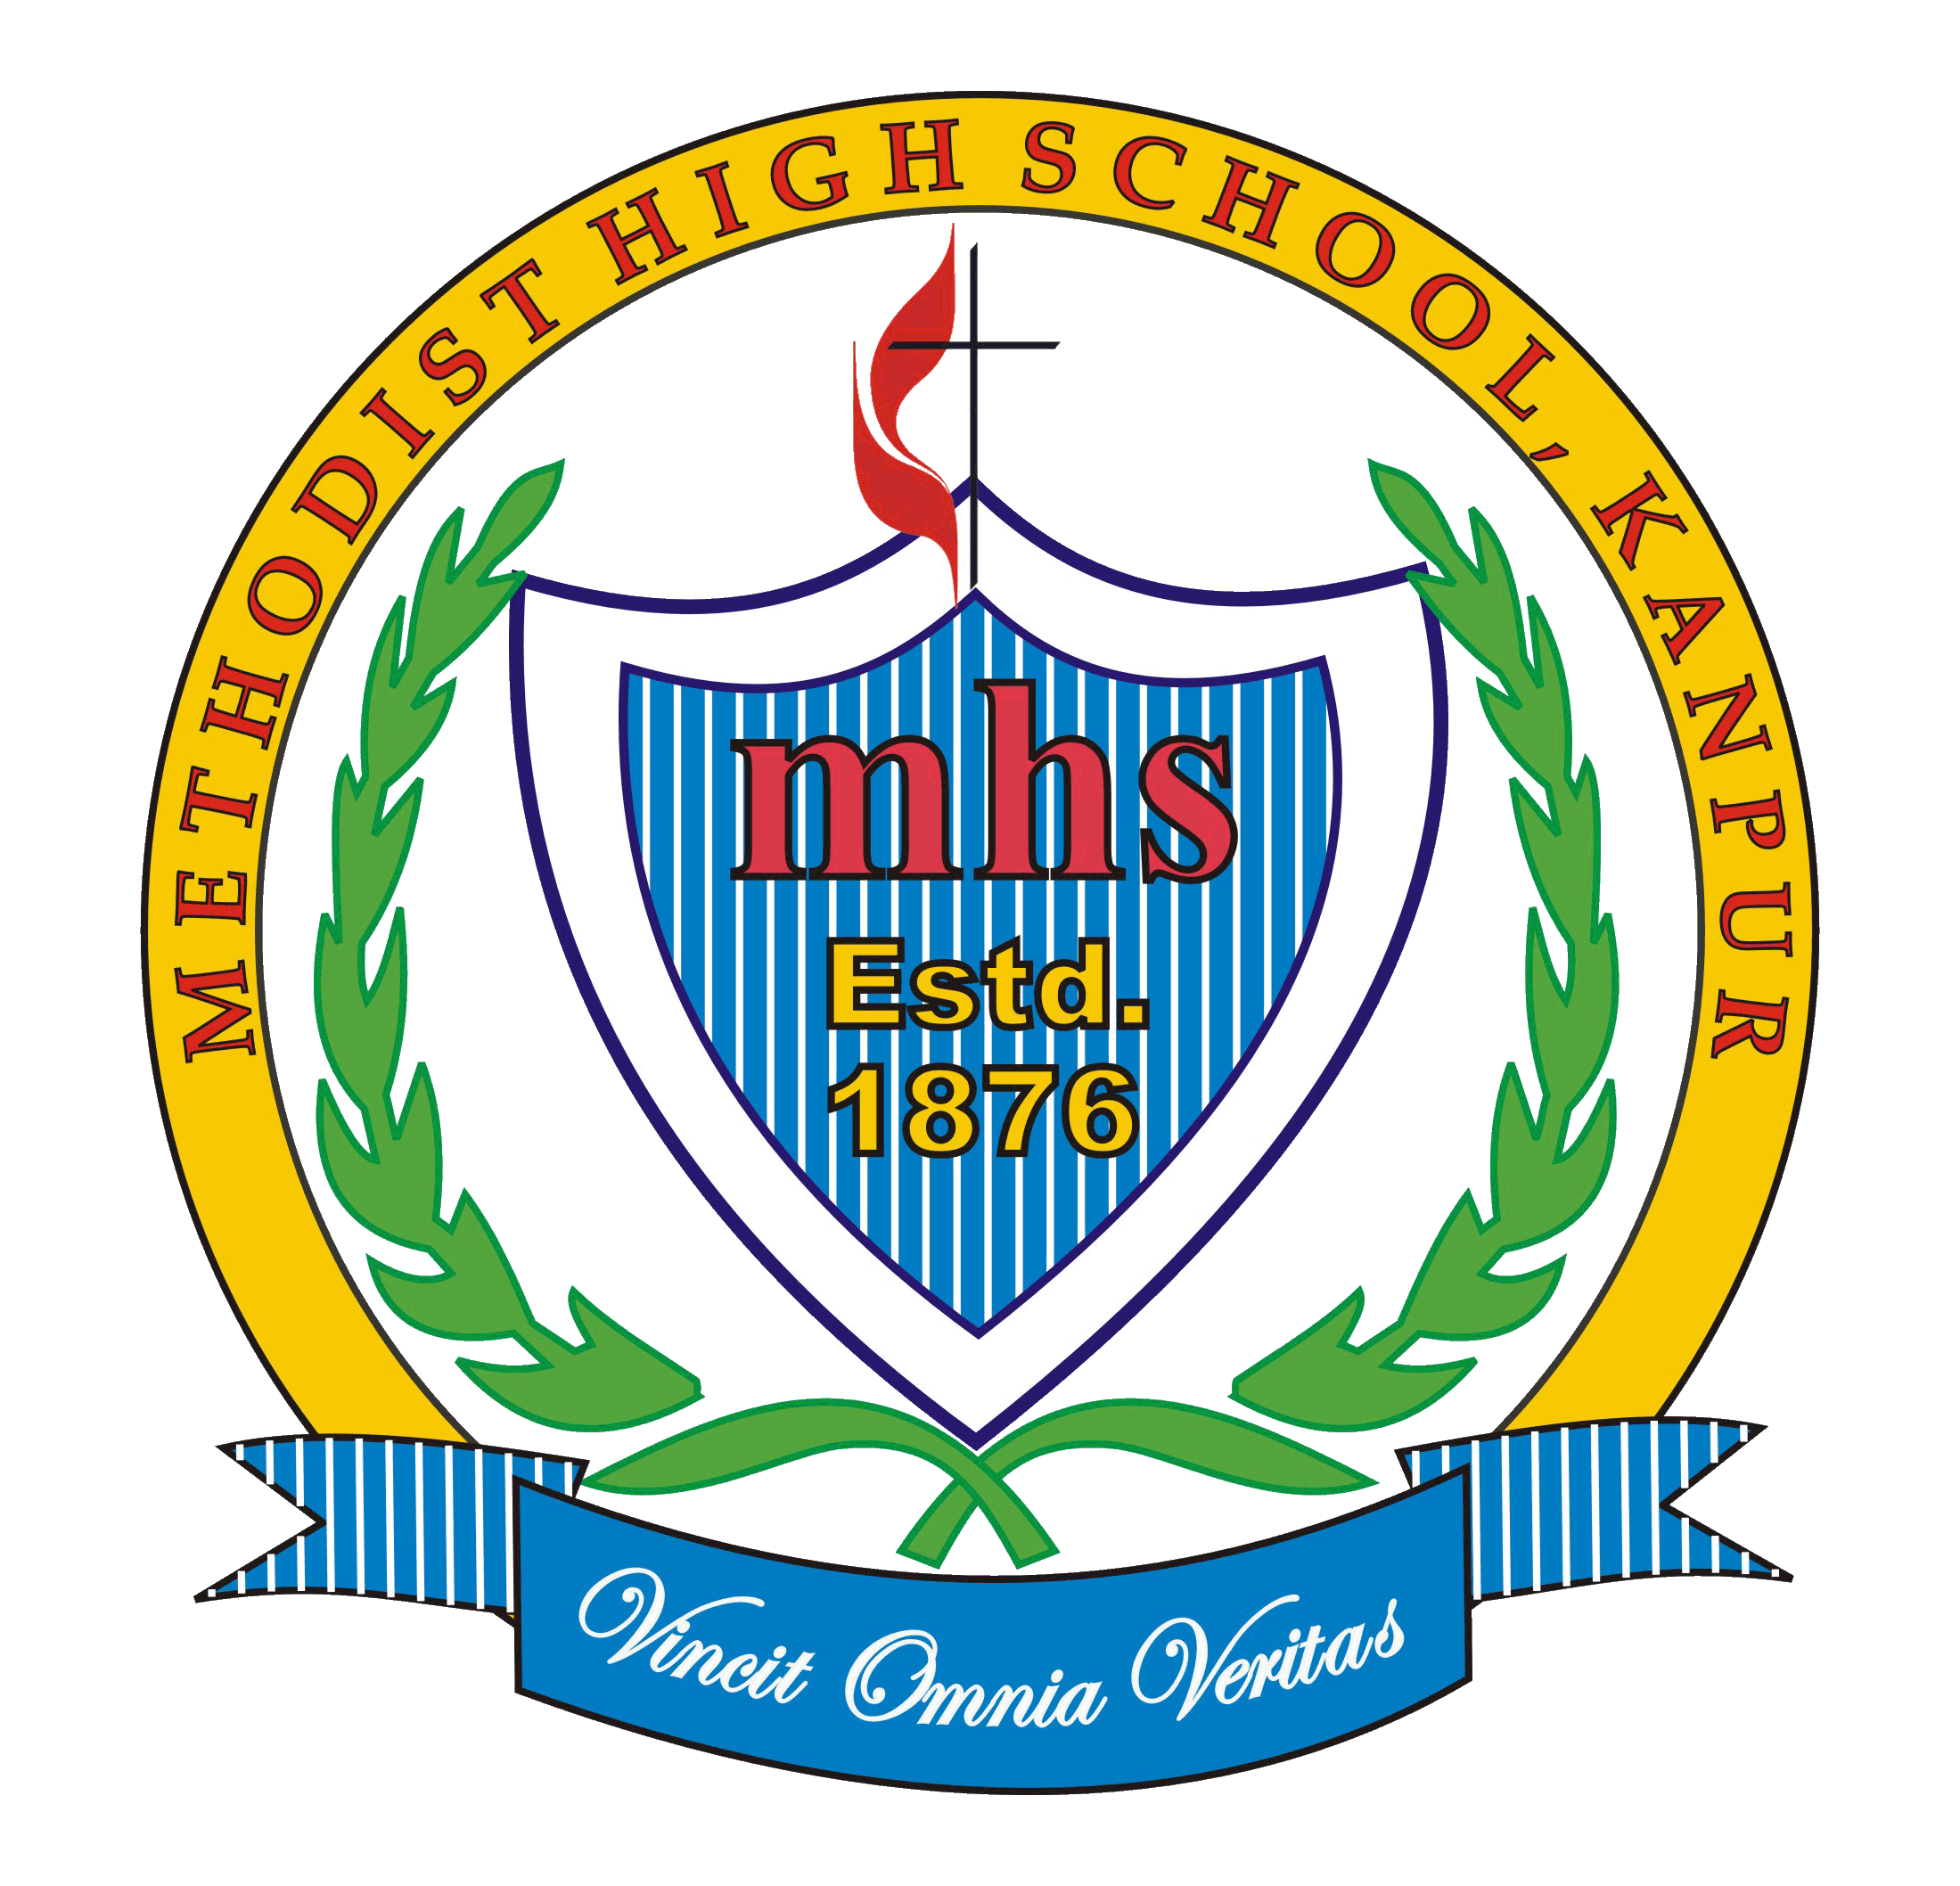 Methodist High School|Schools|Education